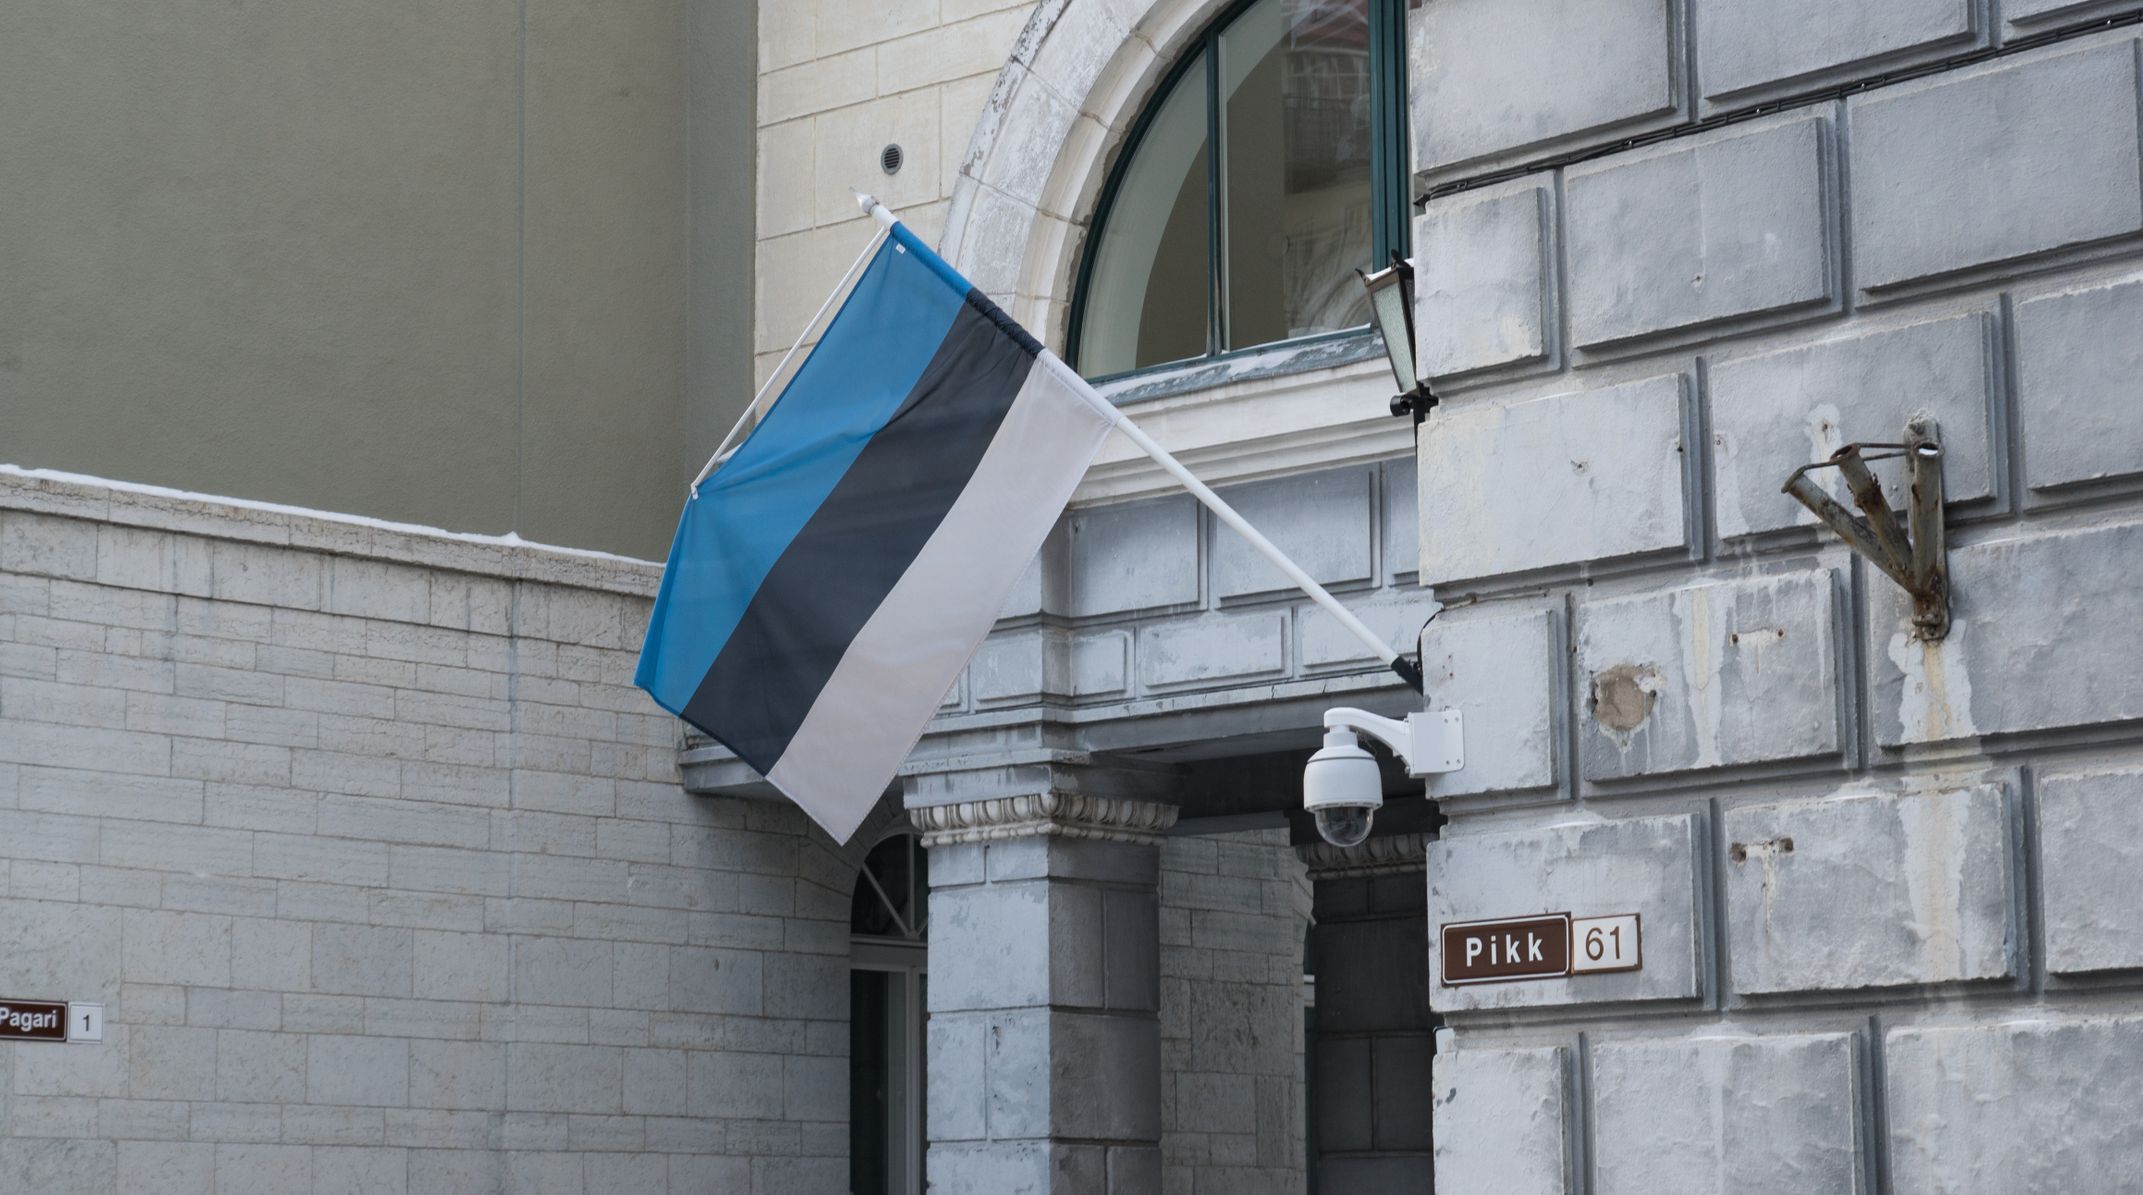 Estonská vlajka